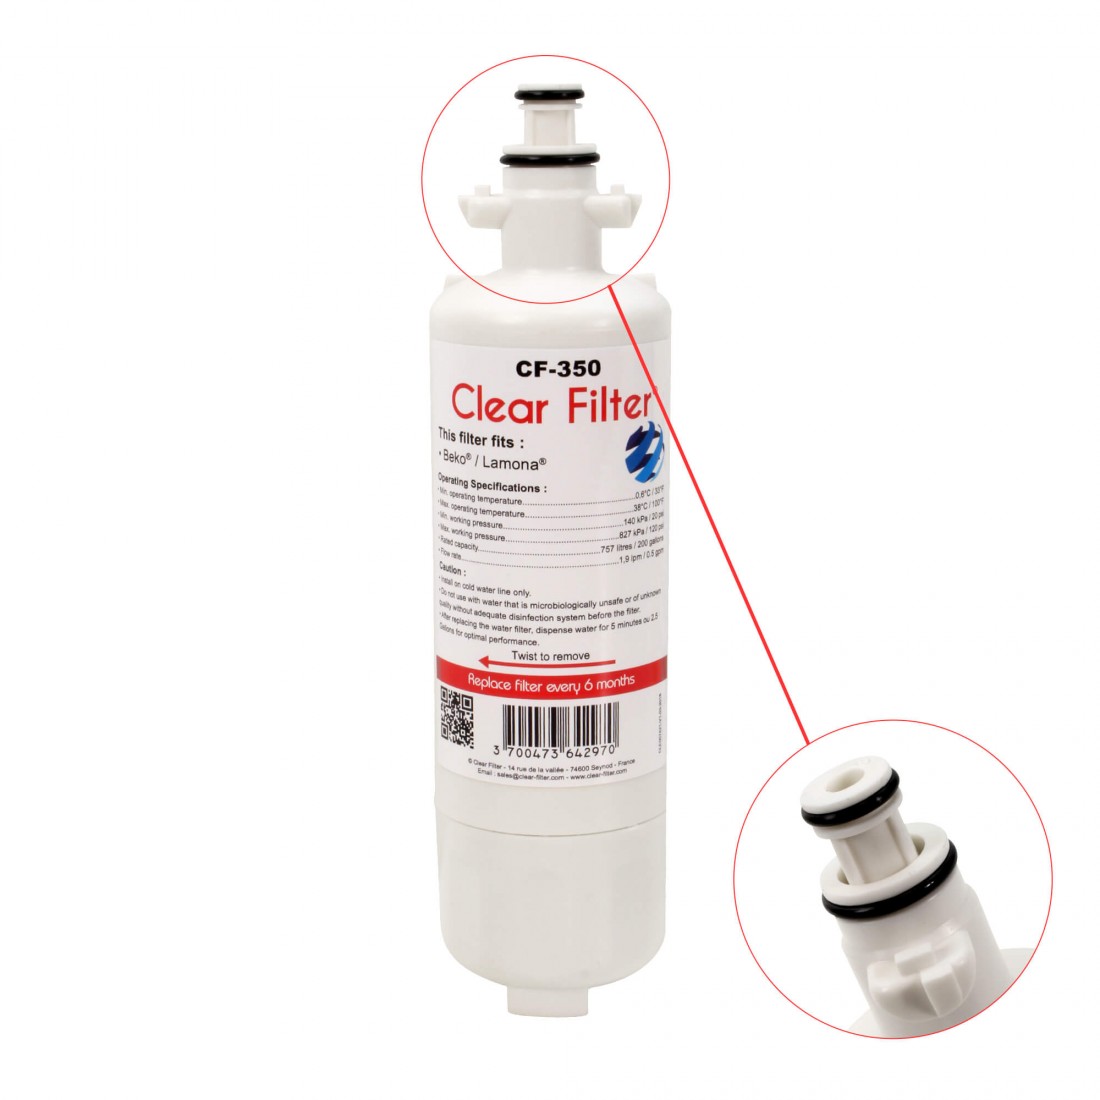 Filtre Clear Filter® 4874960100 CF-350 compatible Beko® / Lamona